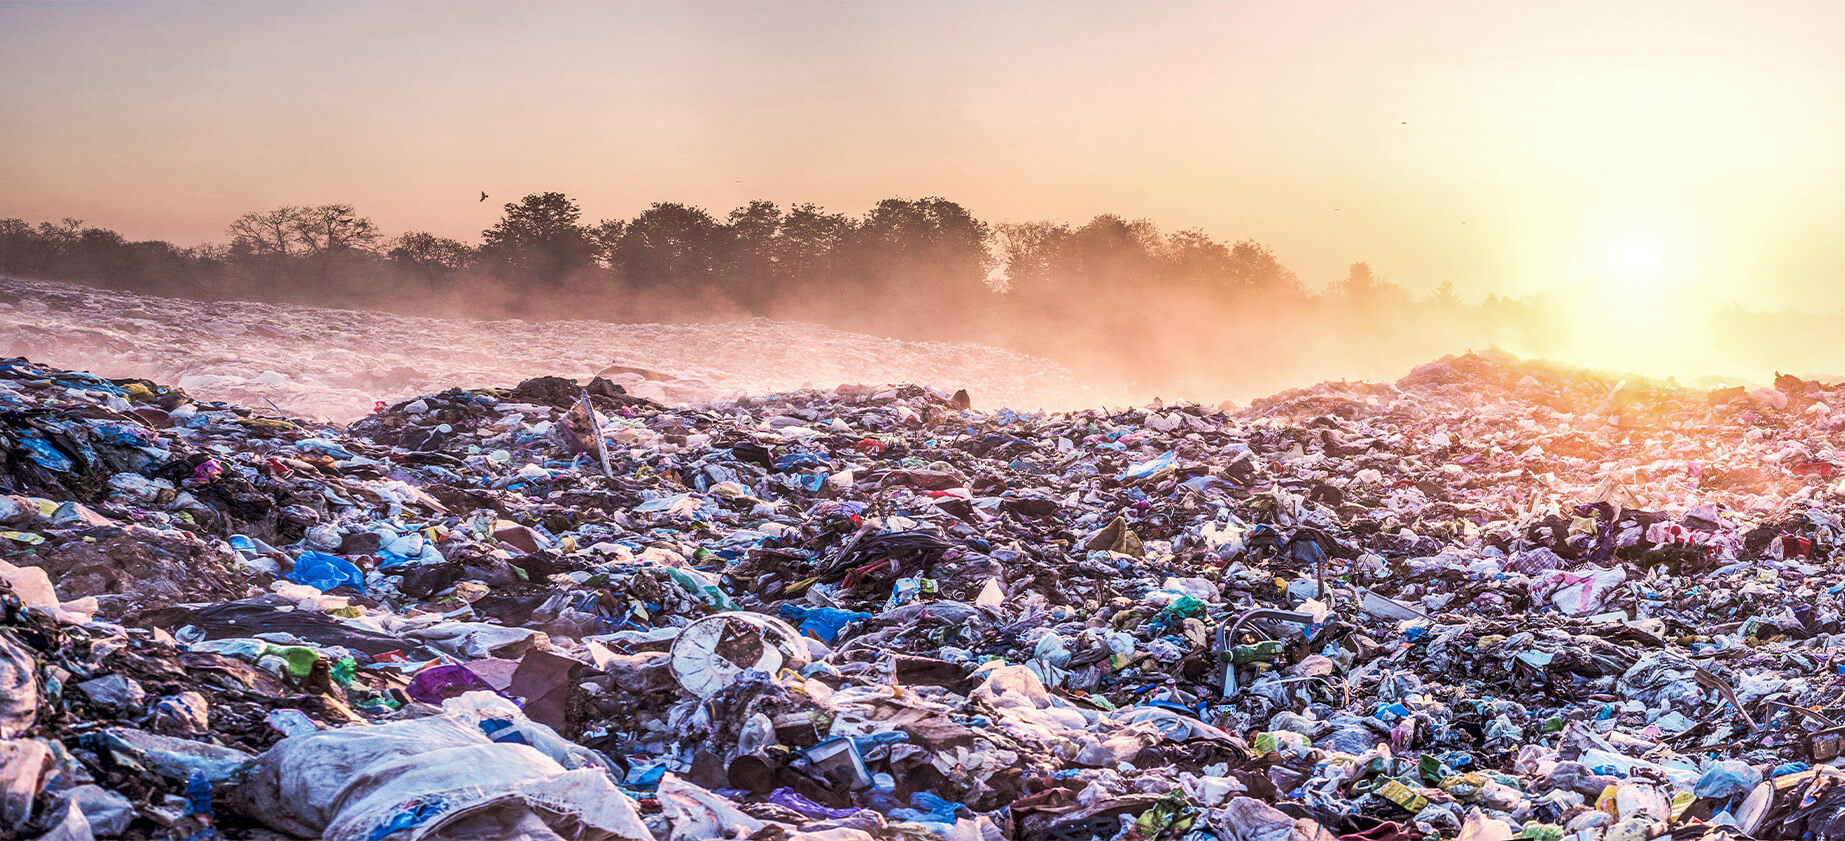 Plastic waste dump at sunrise